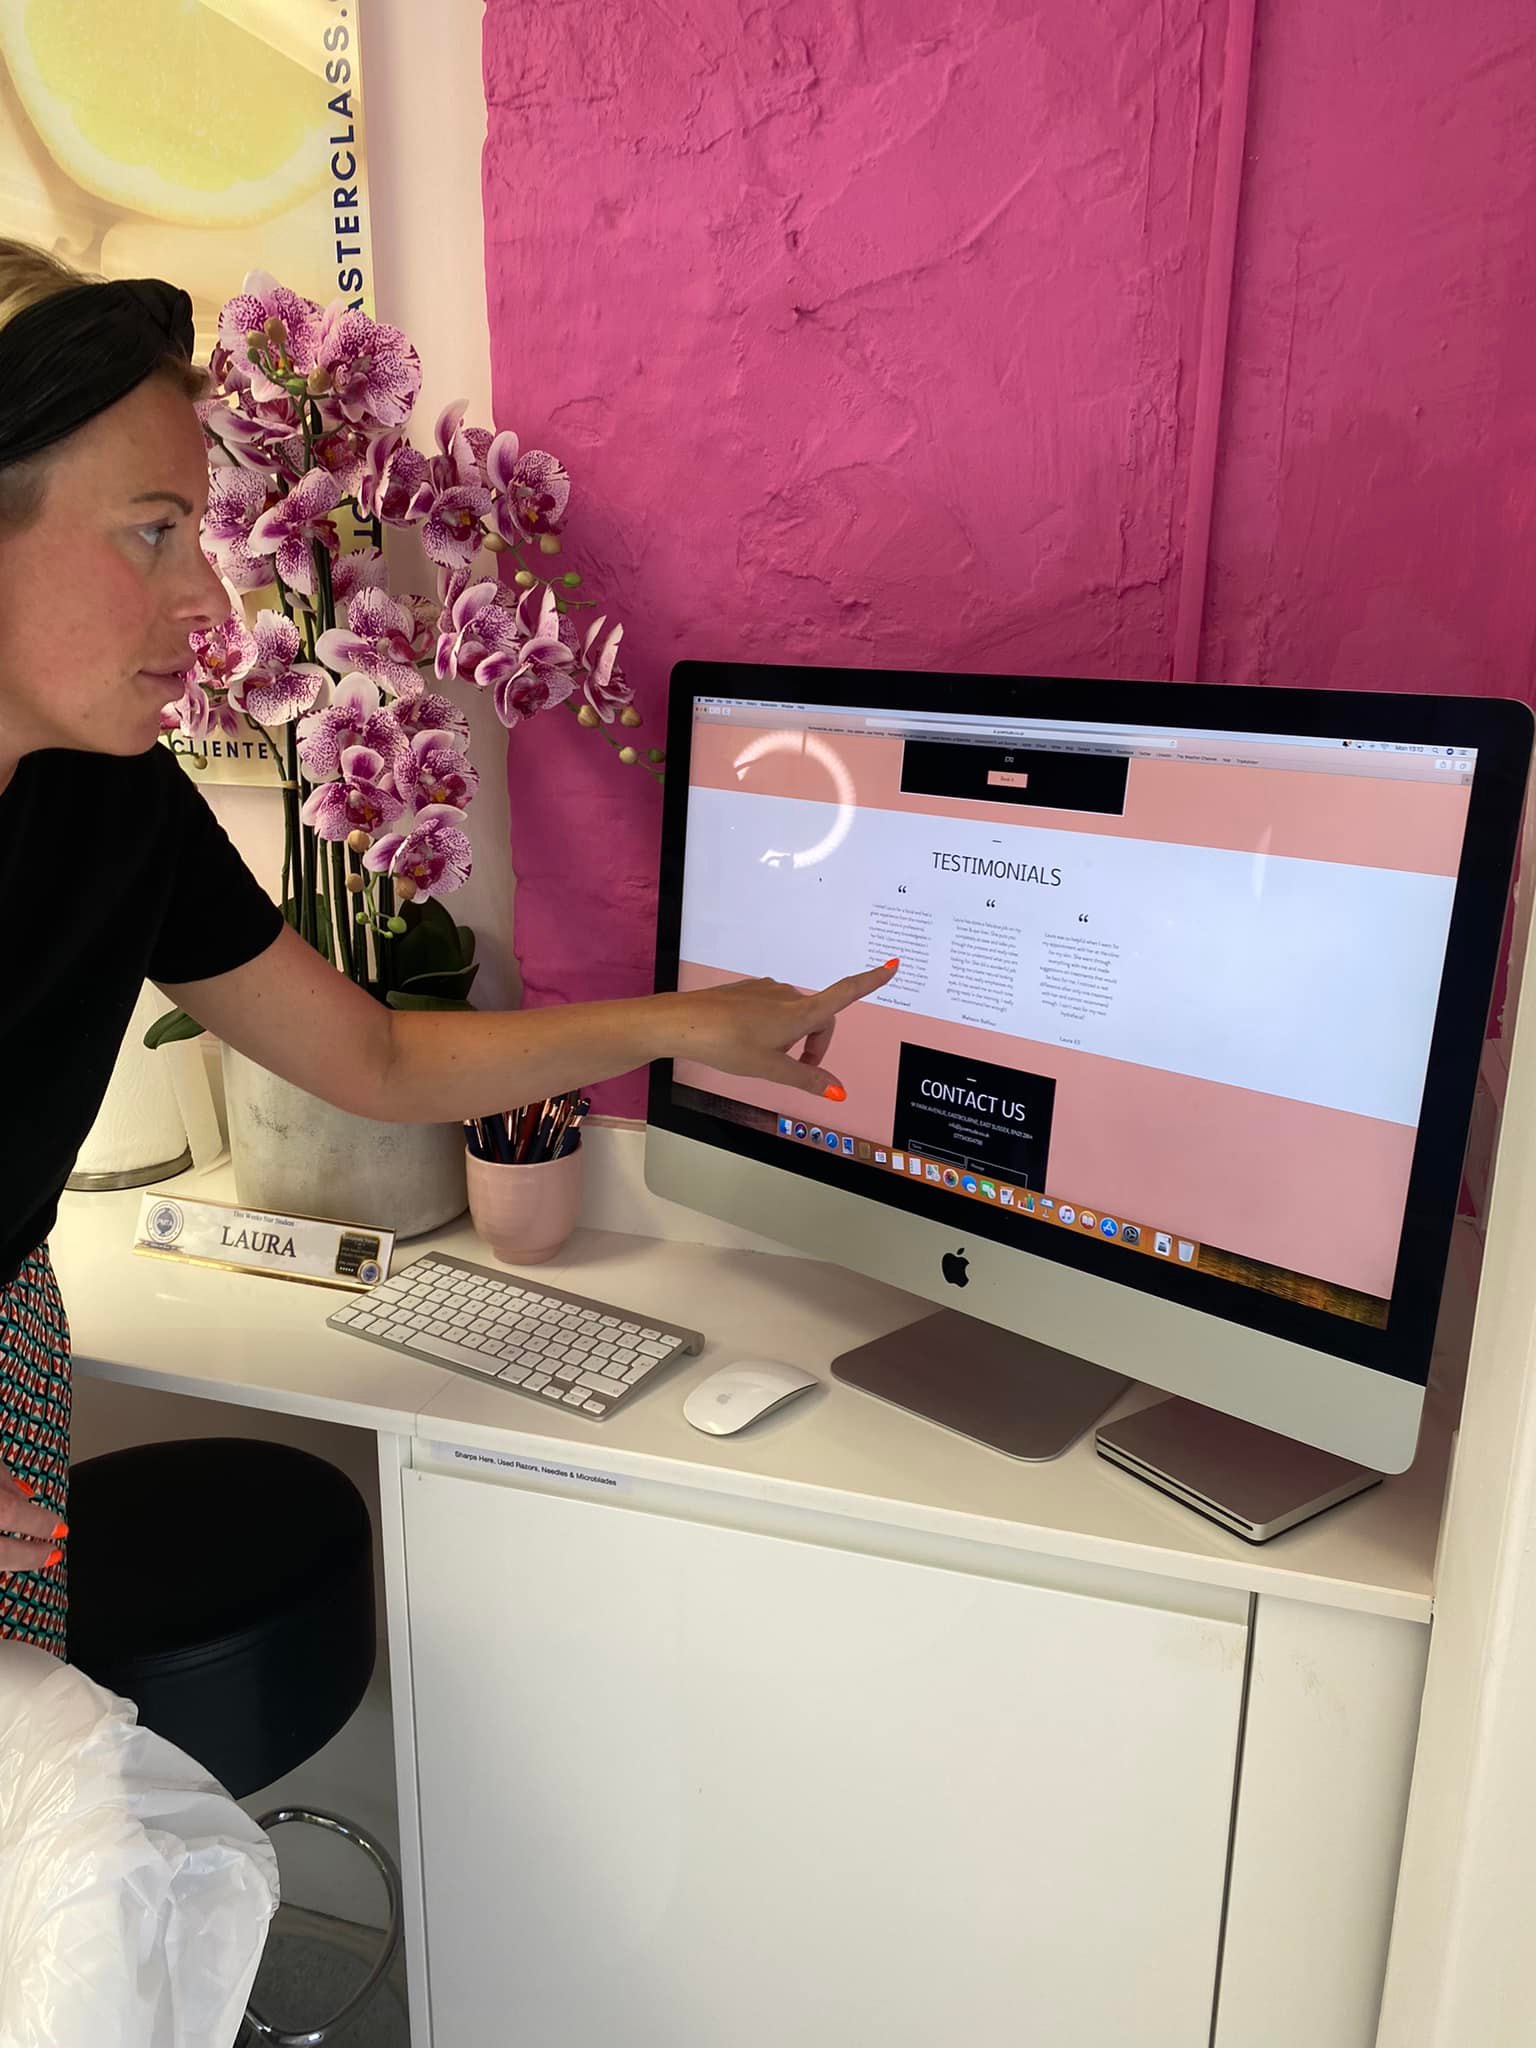 Laura showing off her new website